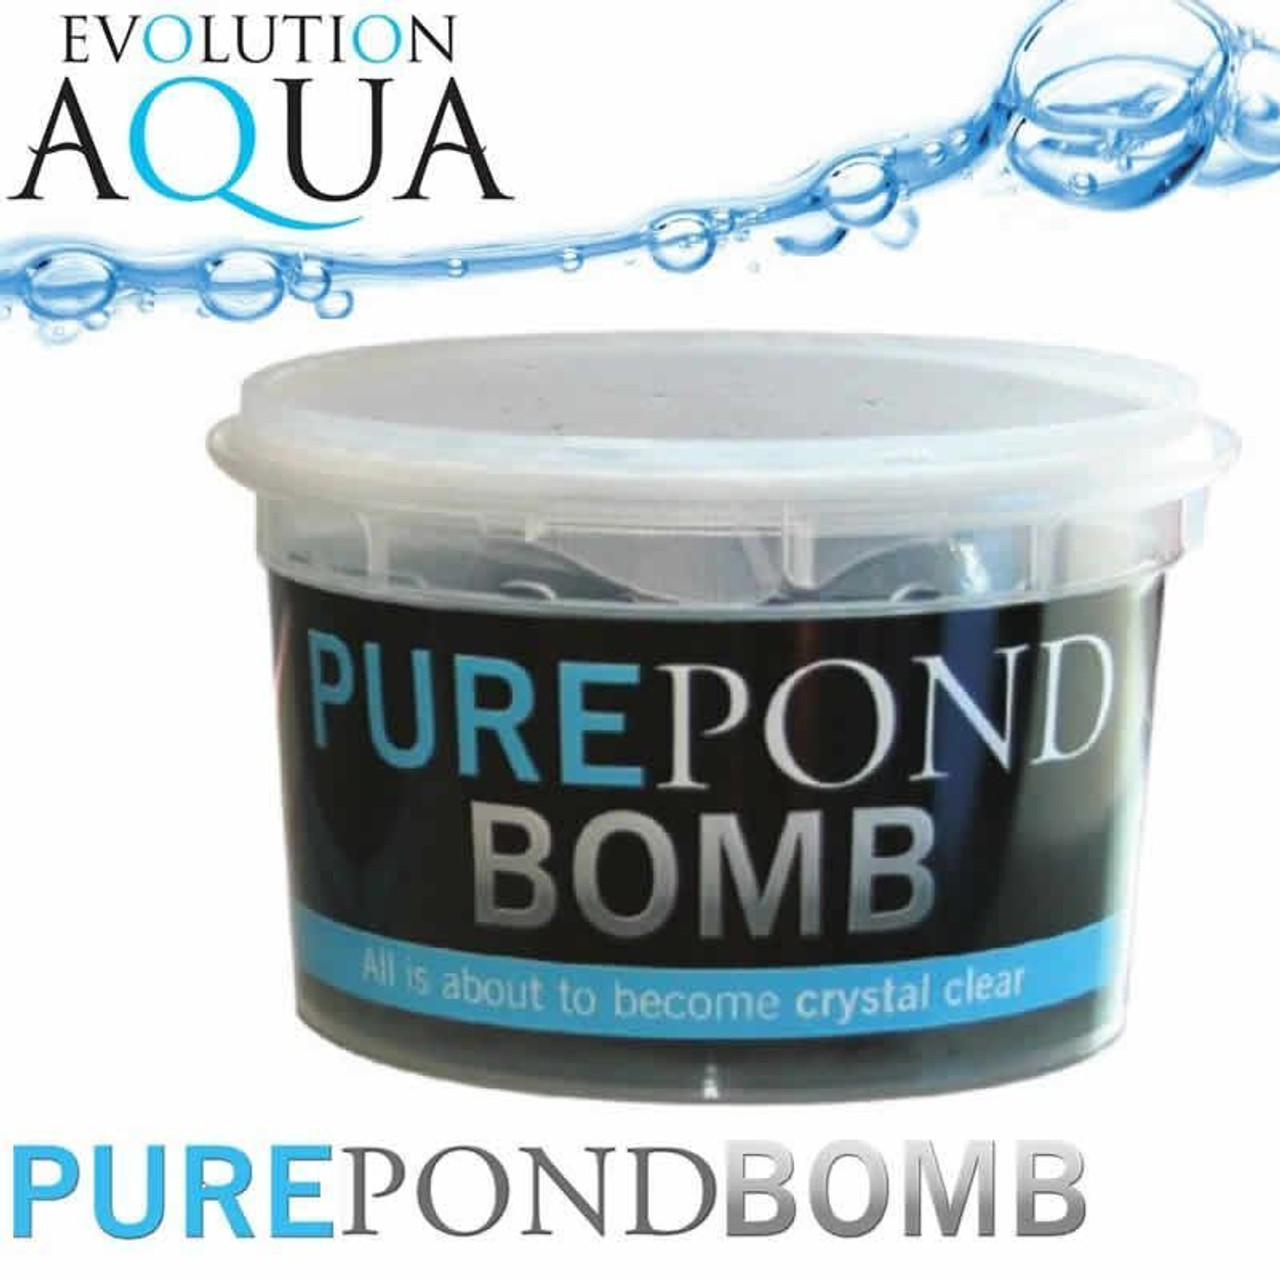 Evolution aqua pond bomb